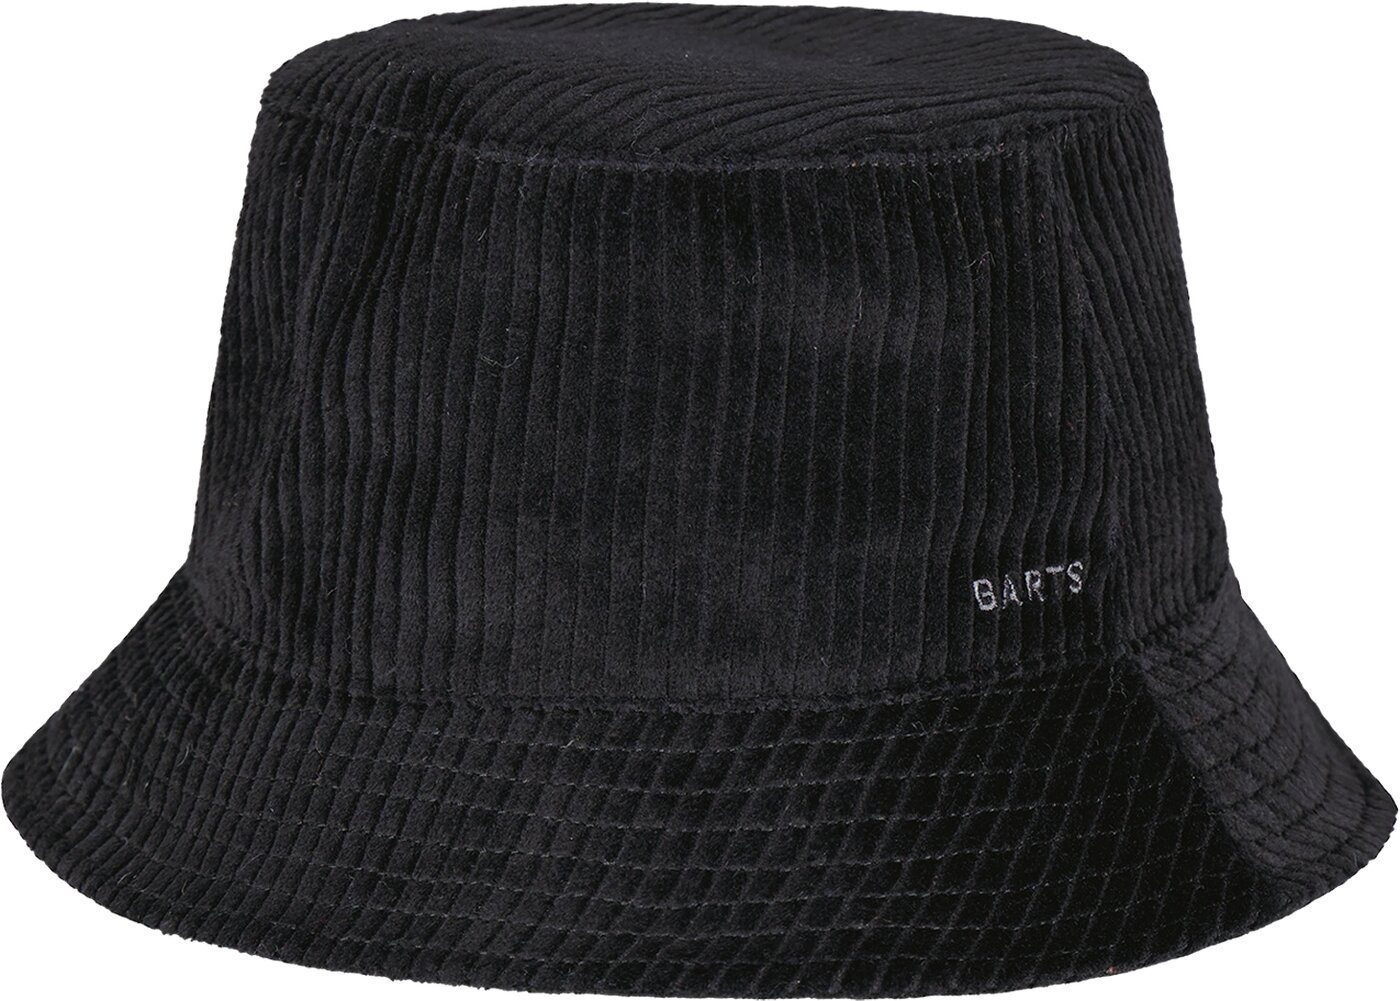 BLACK Snapback Barts Cap Balomba Hat